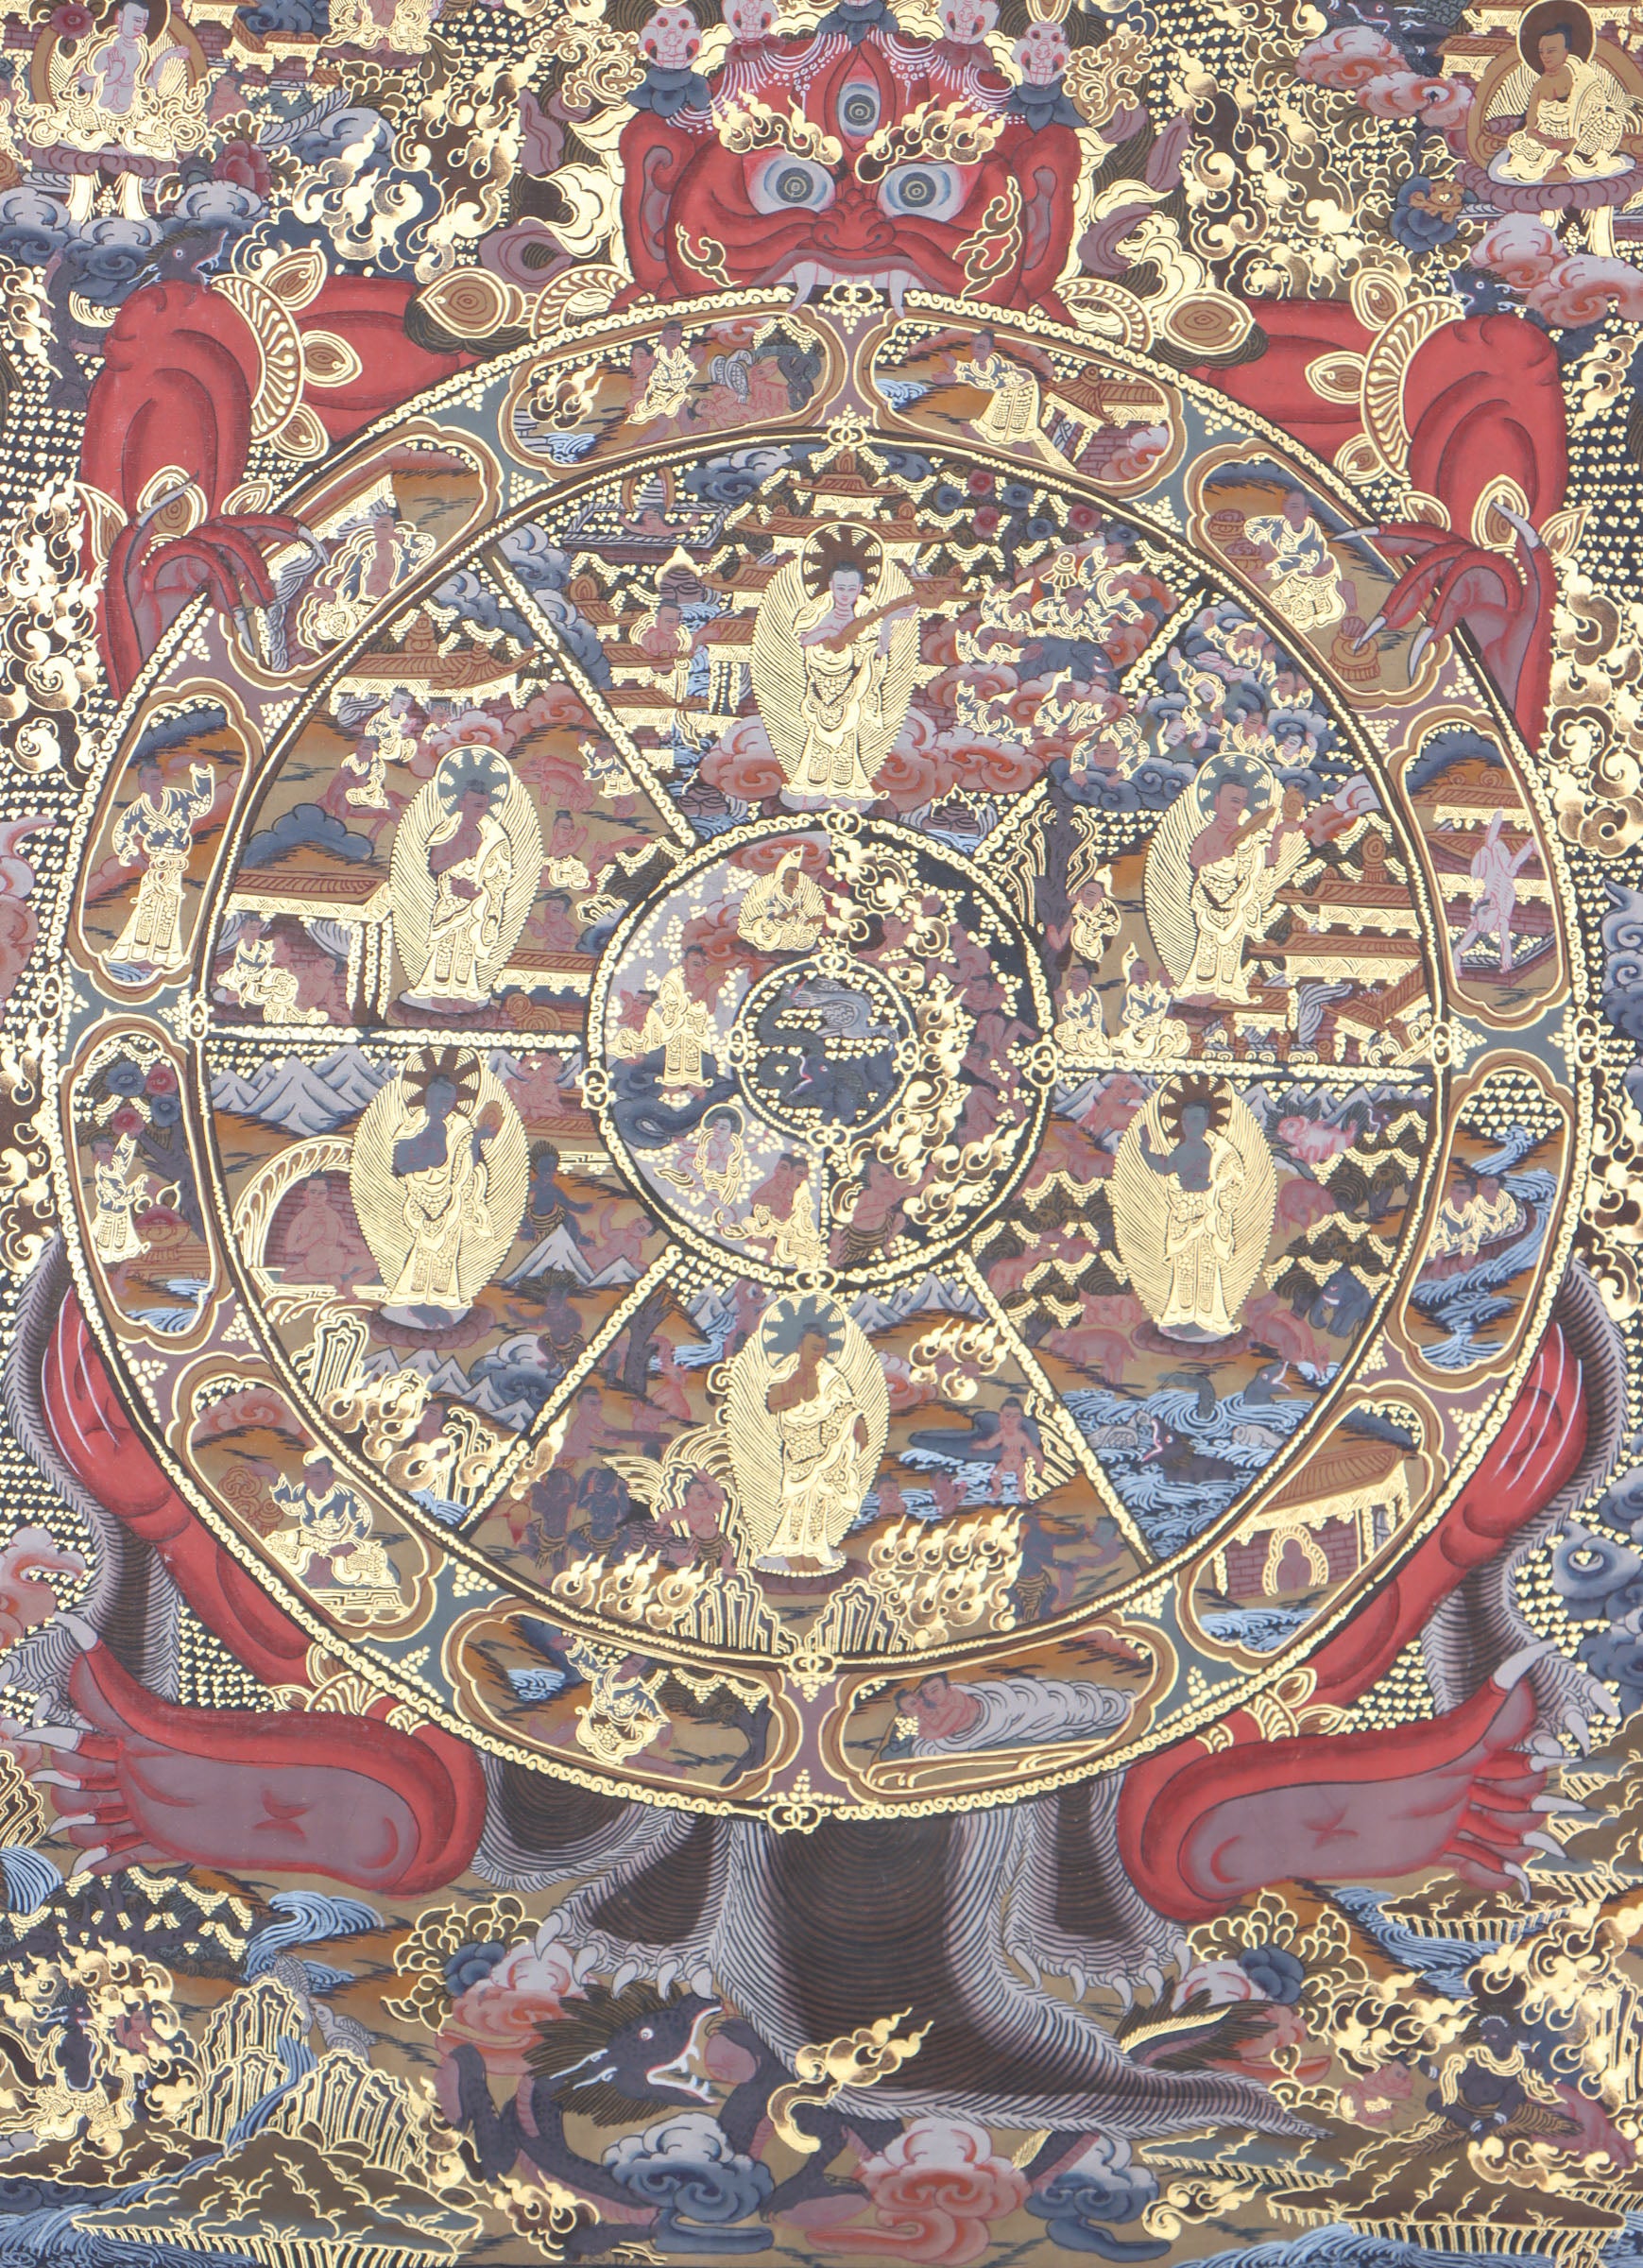 The Wheel of Life thangka illuminates Buddhism's suffering, impermanence, and liberation.